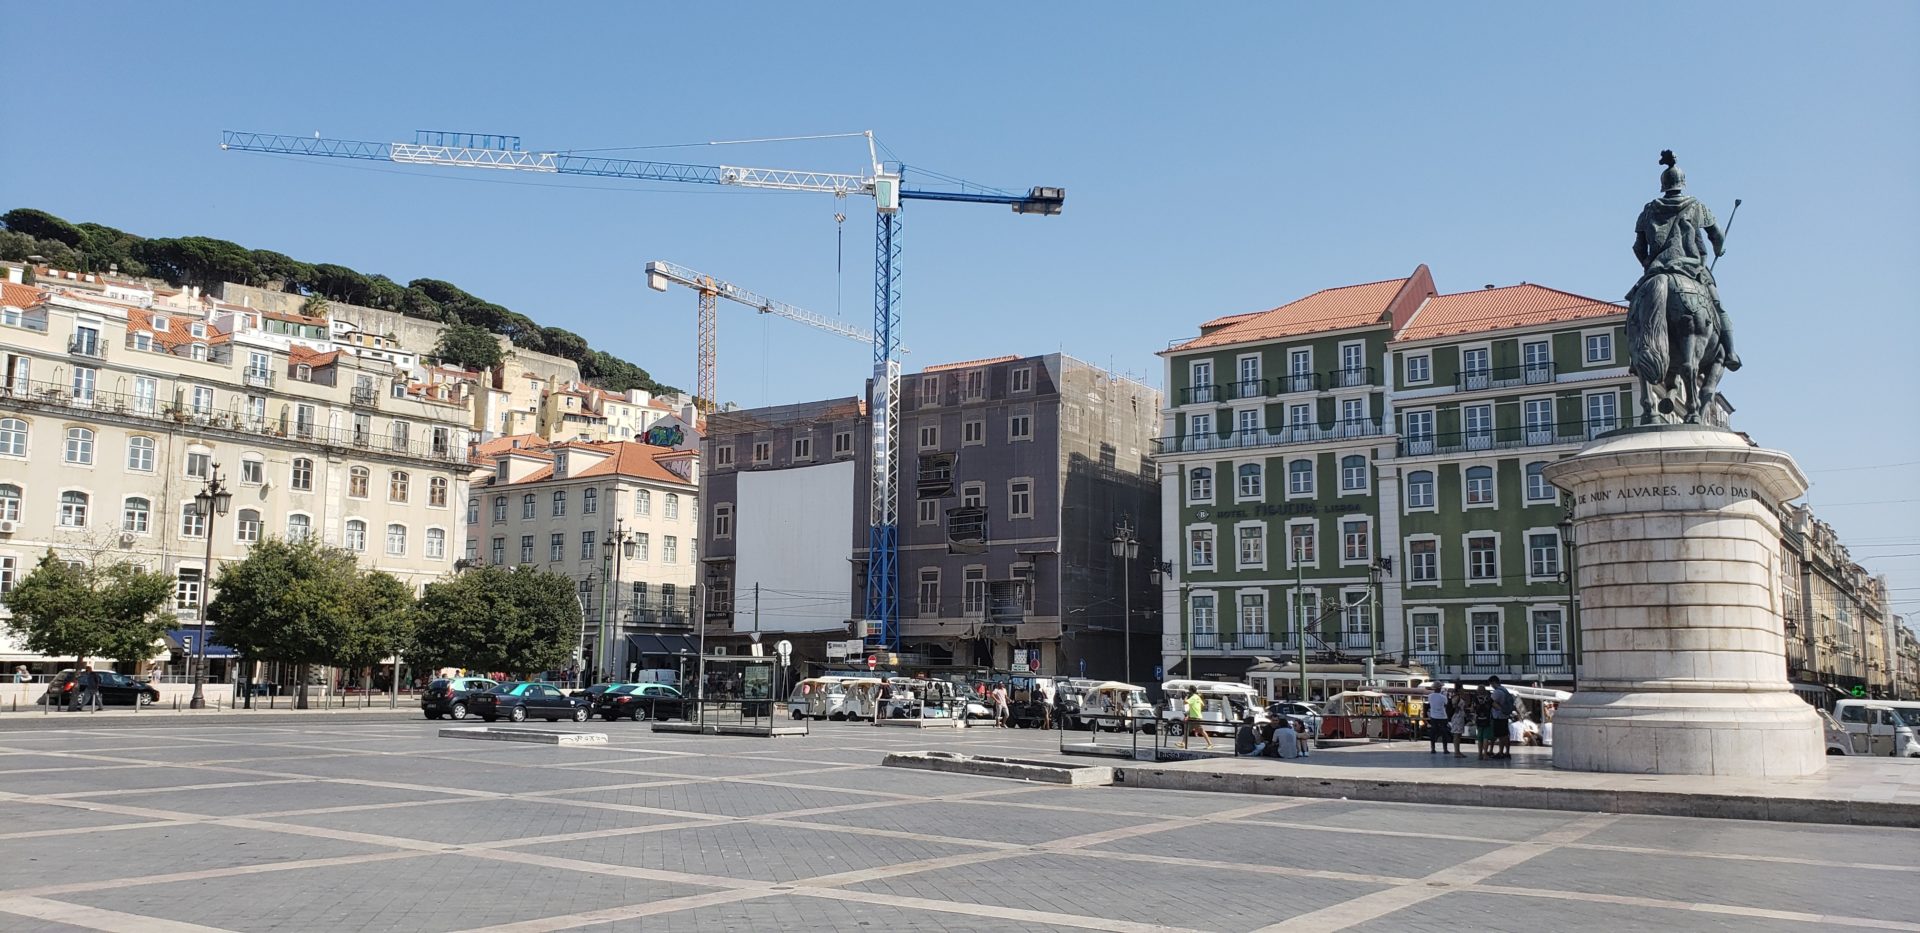 a large crane in a city